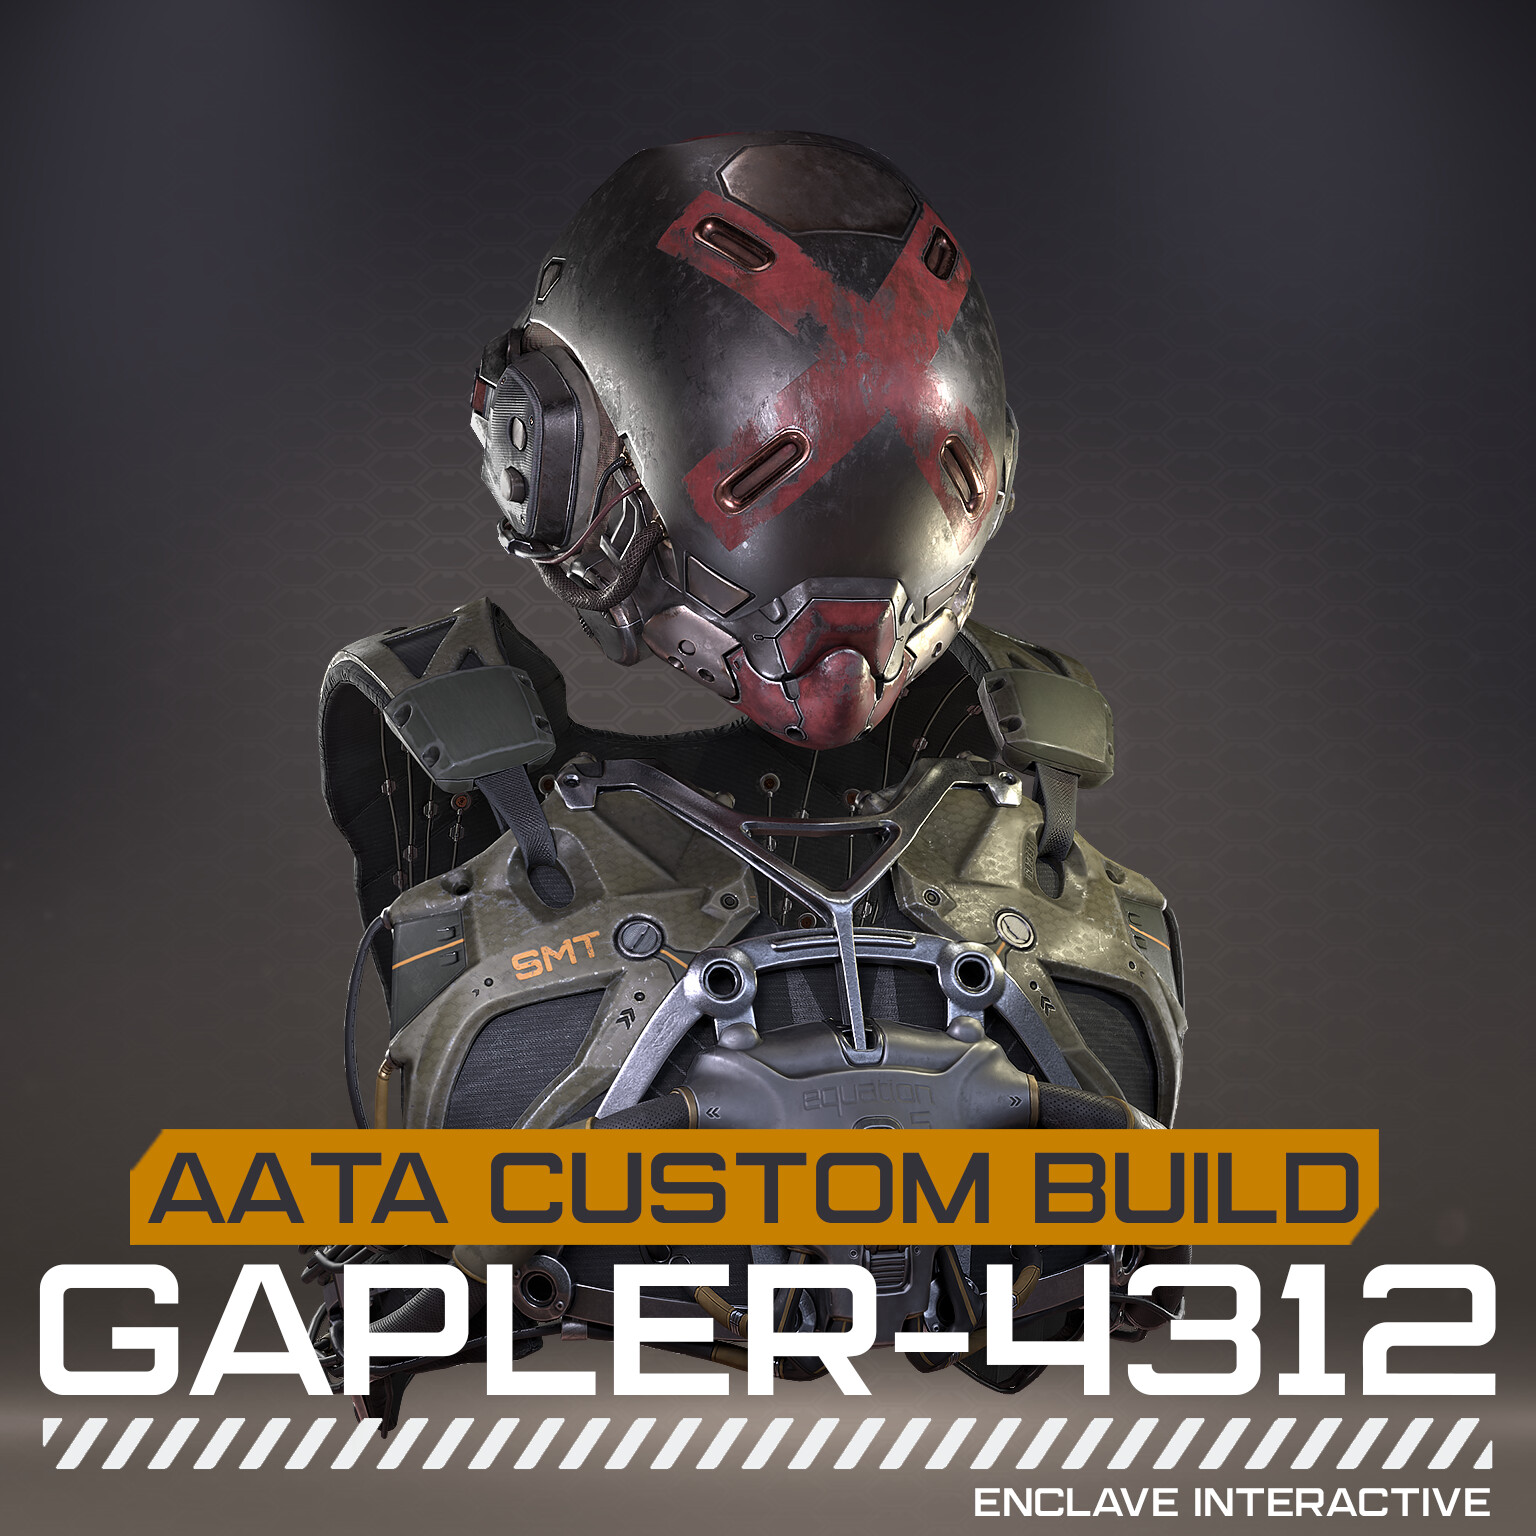 AATA custom build  with helmet